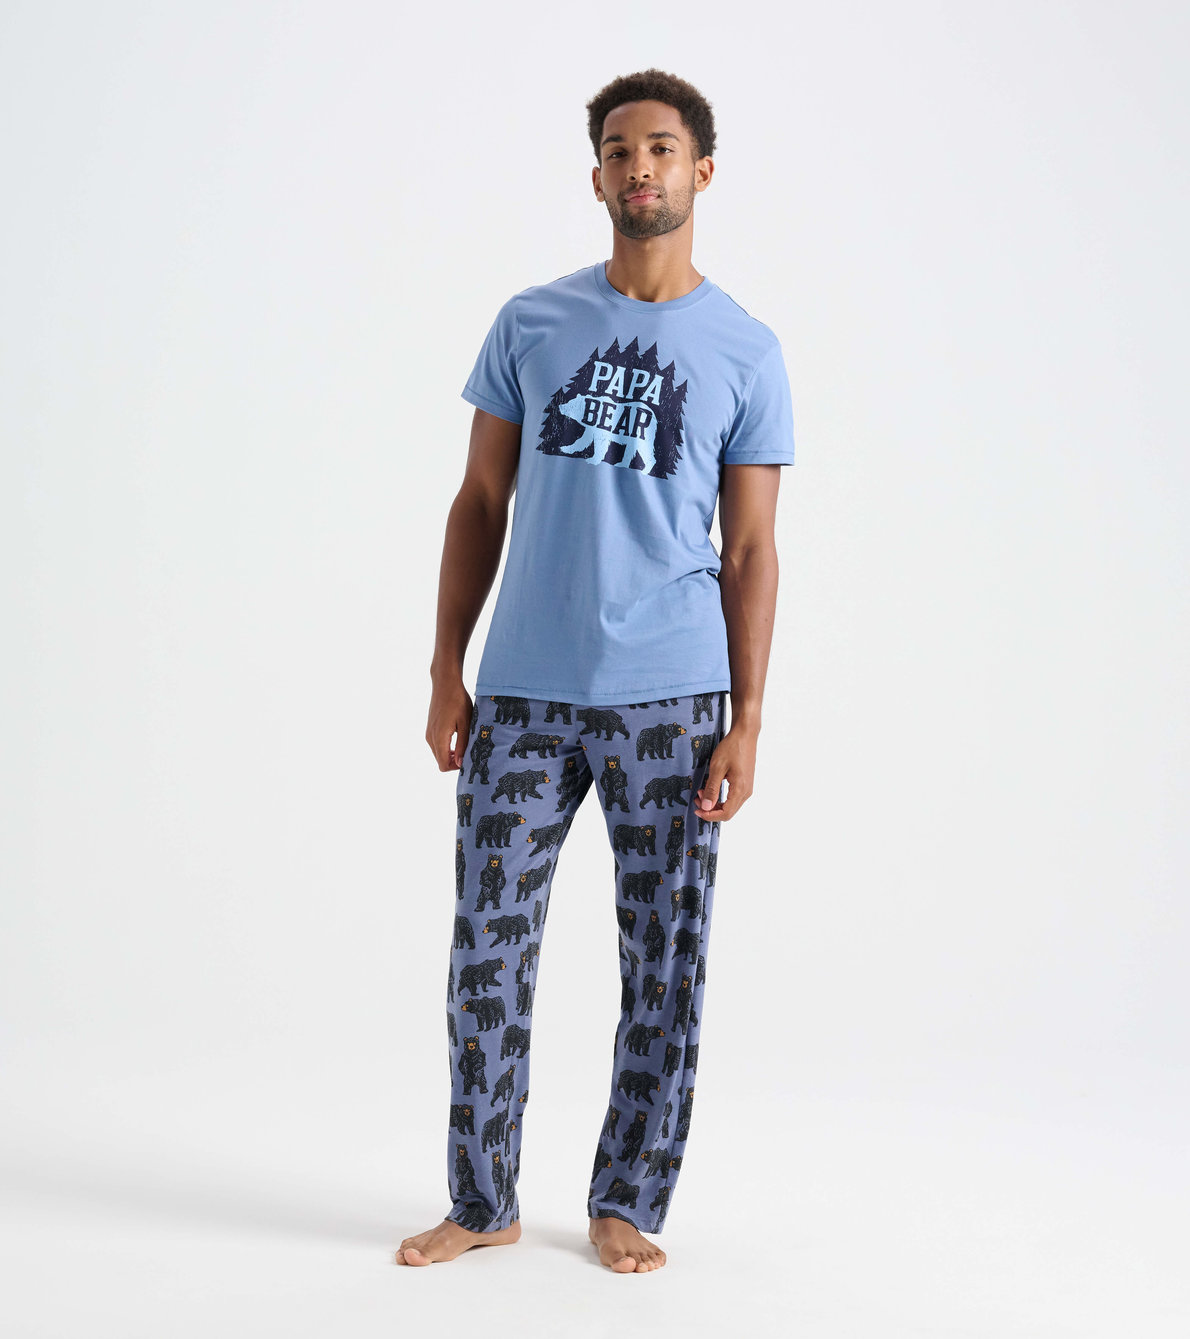 View larger image of Men's Woods Papa Bear T-Shirt and Pants Pajama Separates